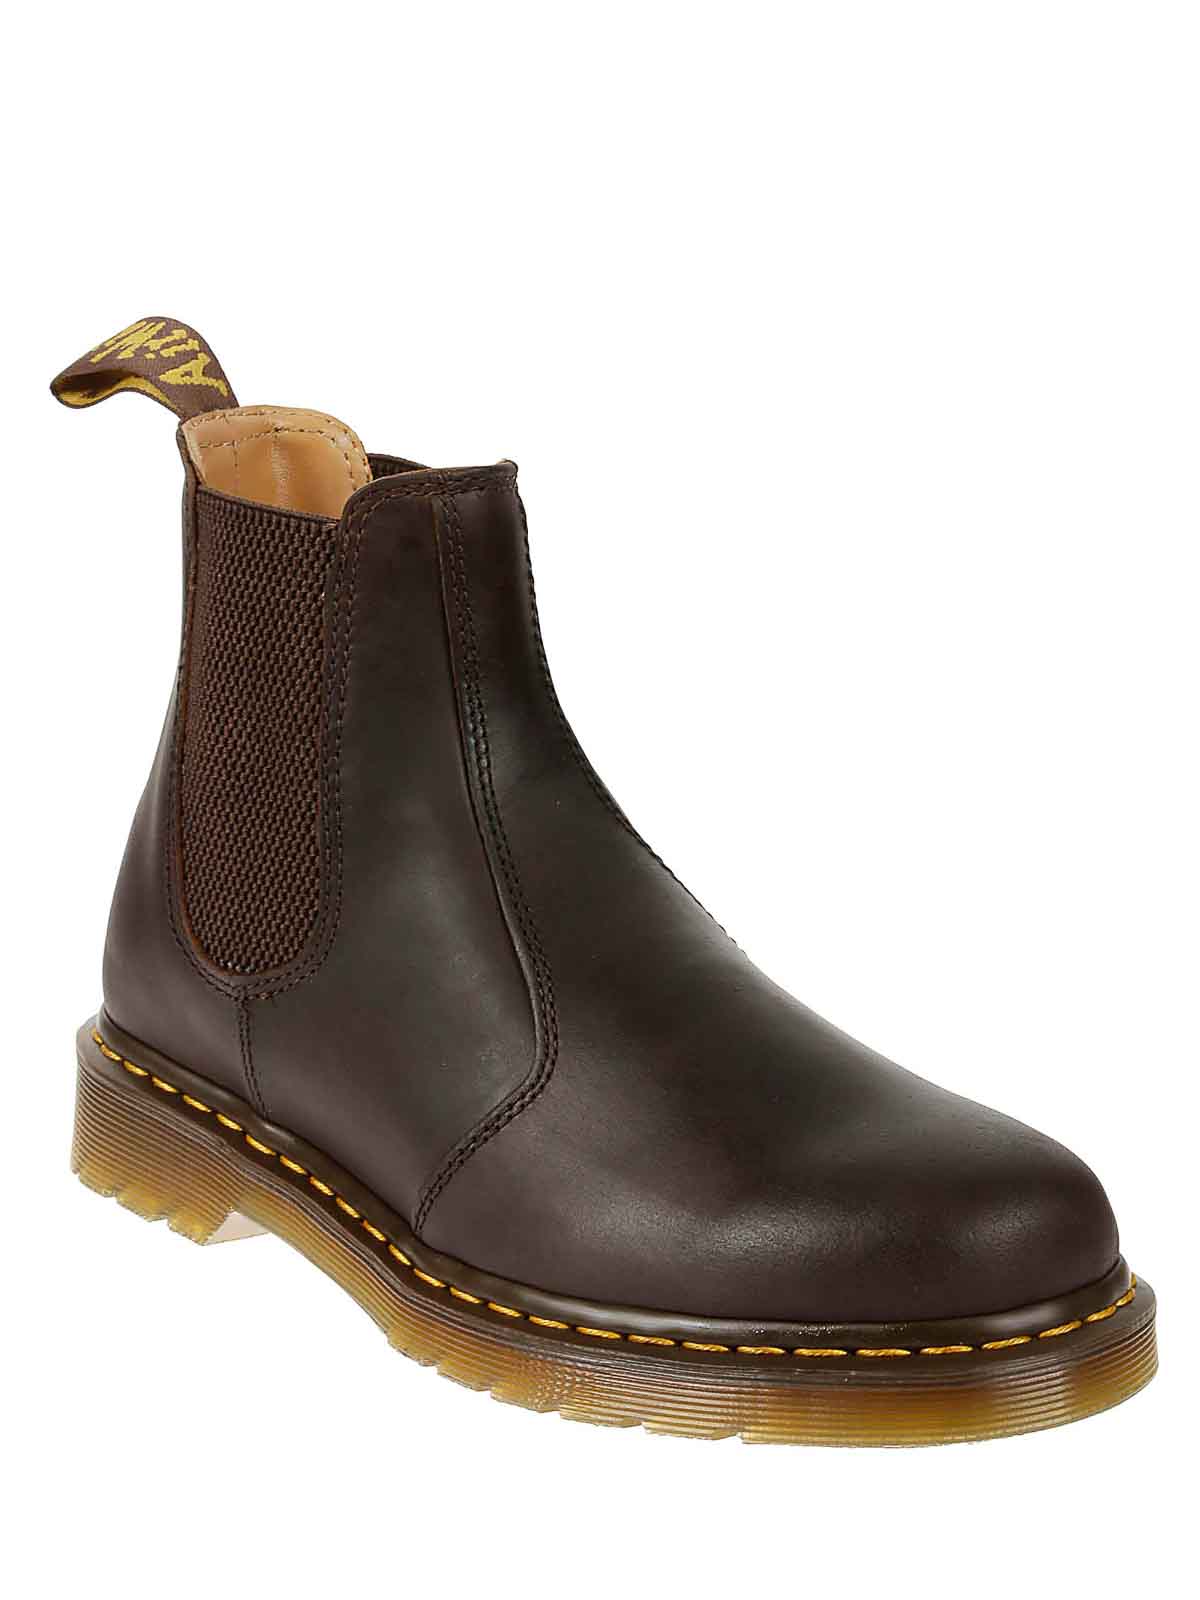 Shop Dr. Martens' Brown Ankle Boot